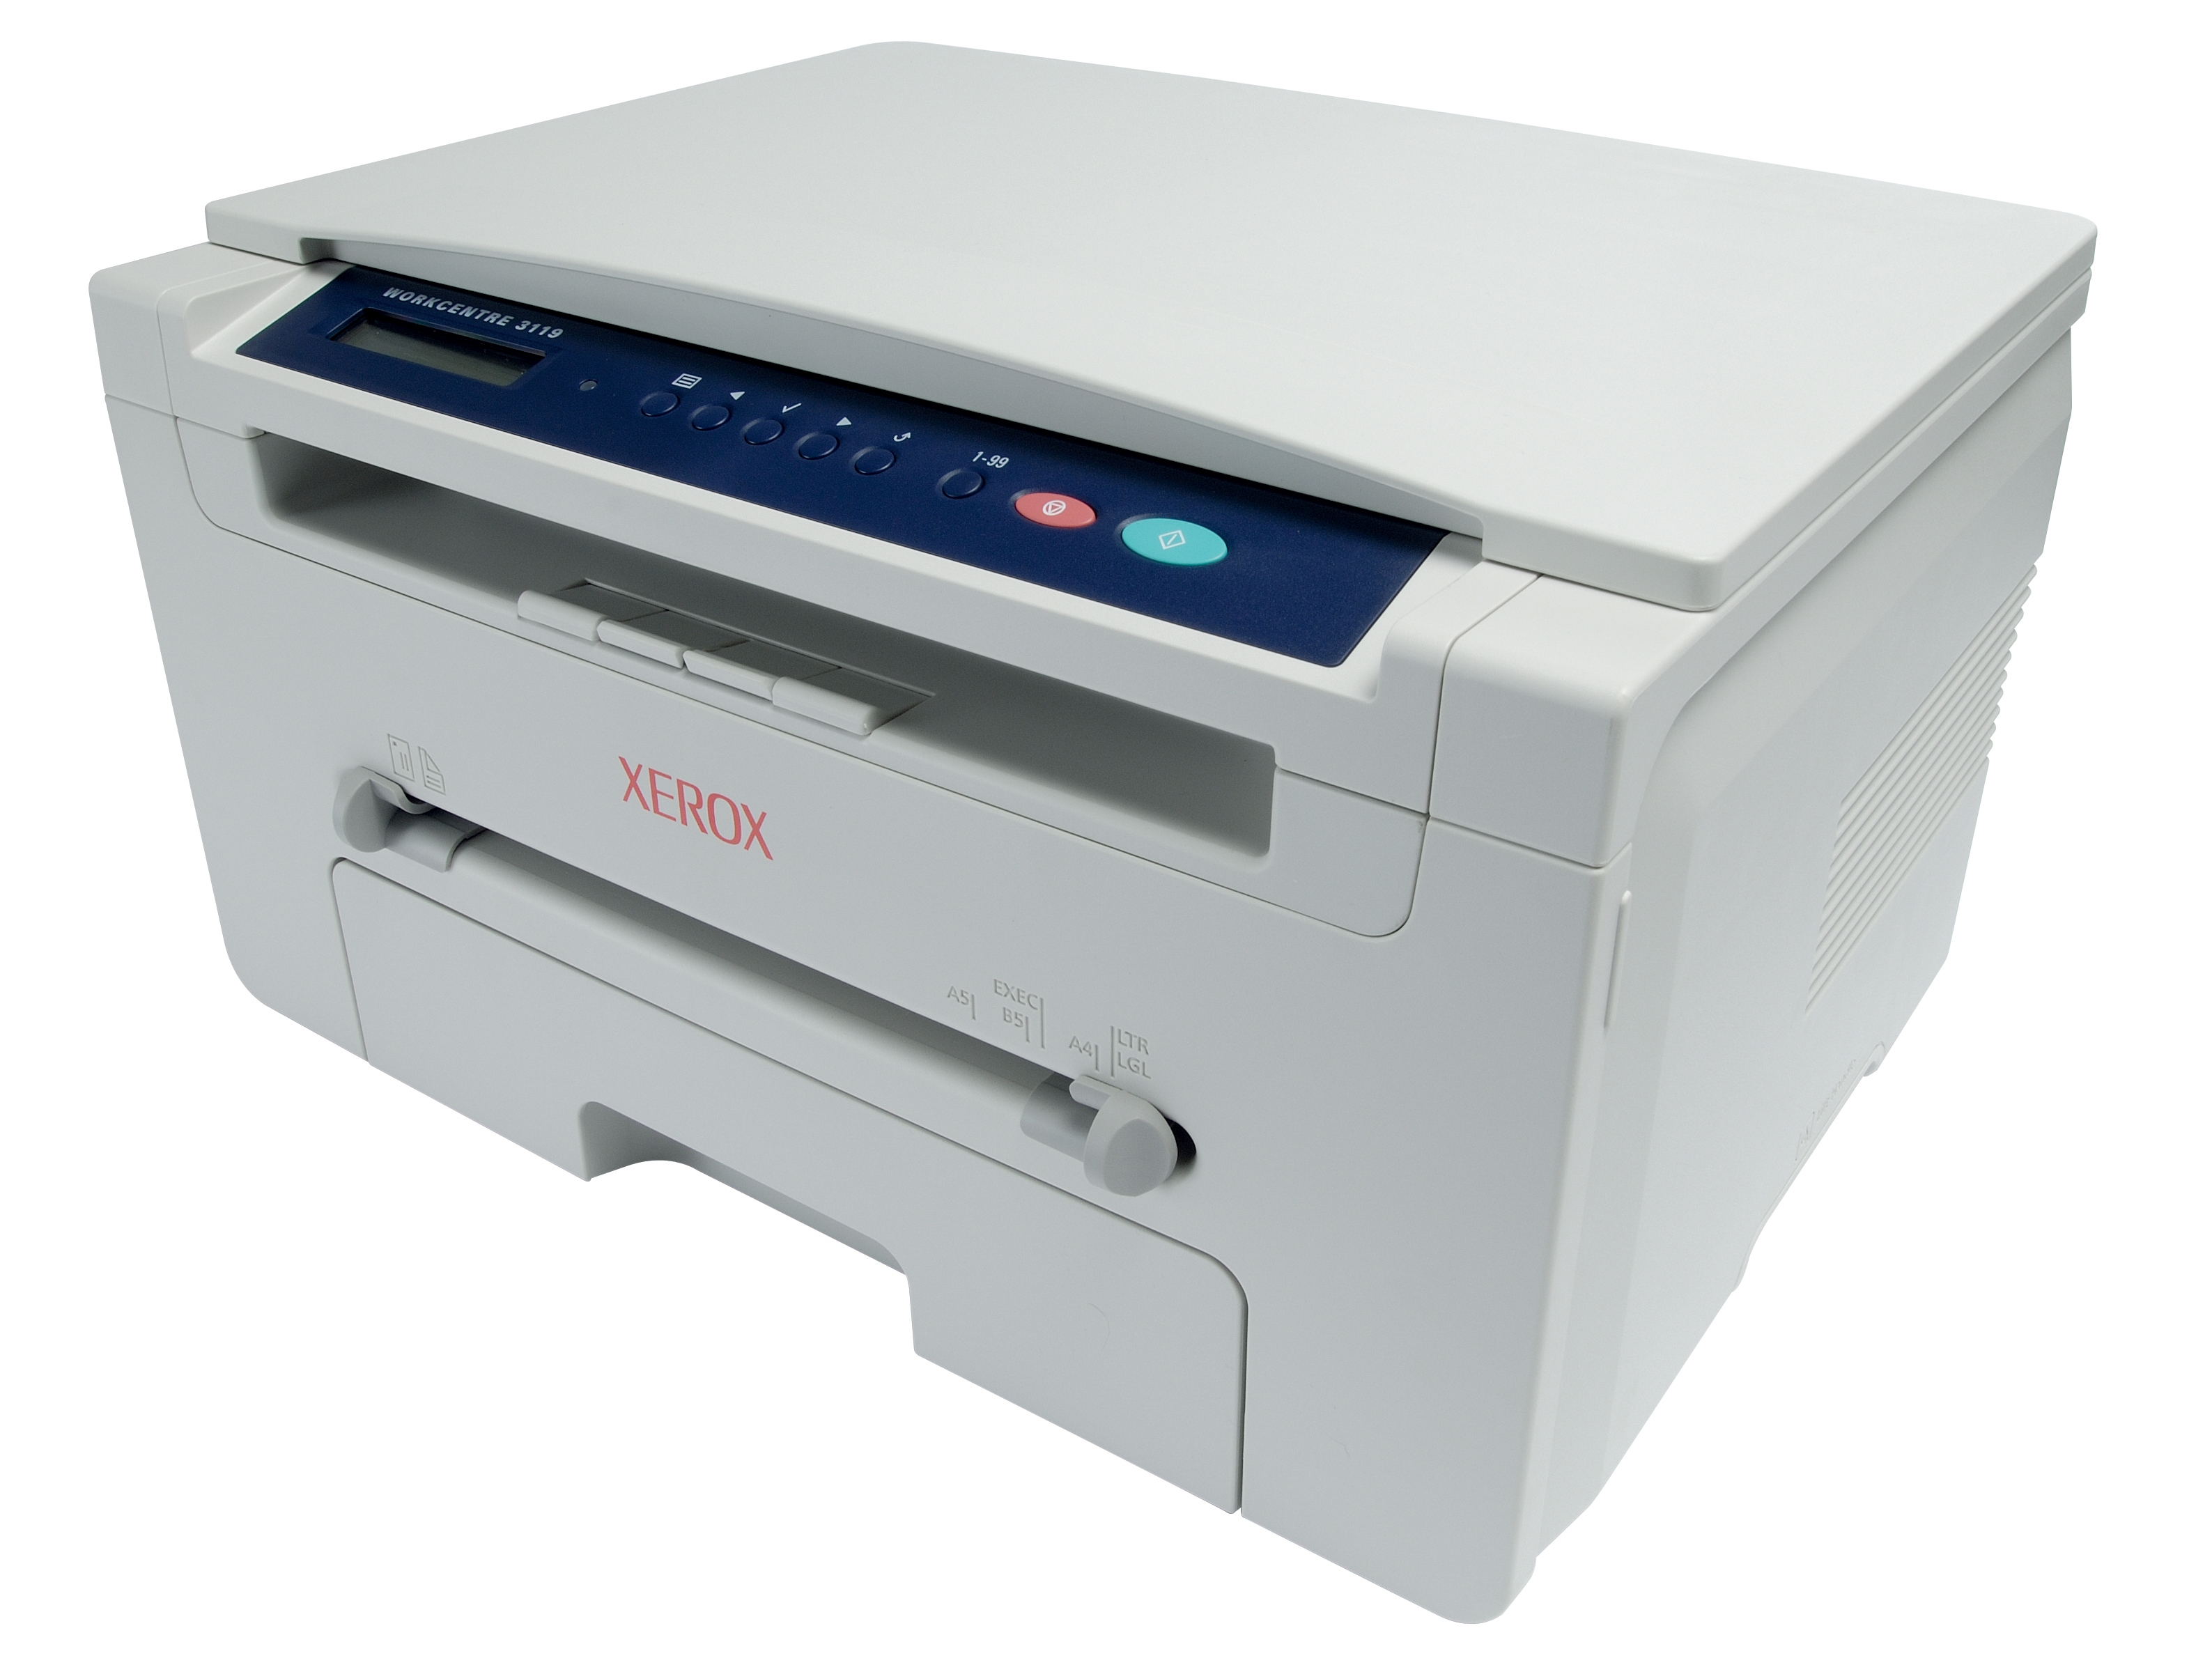 Xerox scan software windows 10